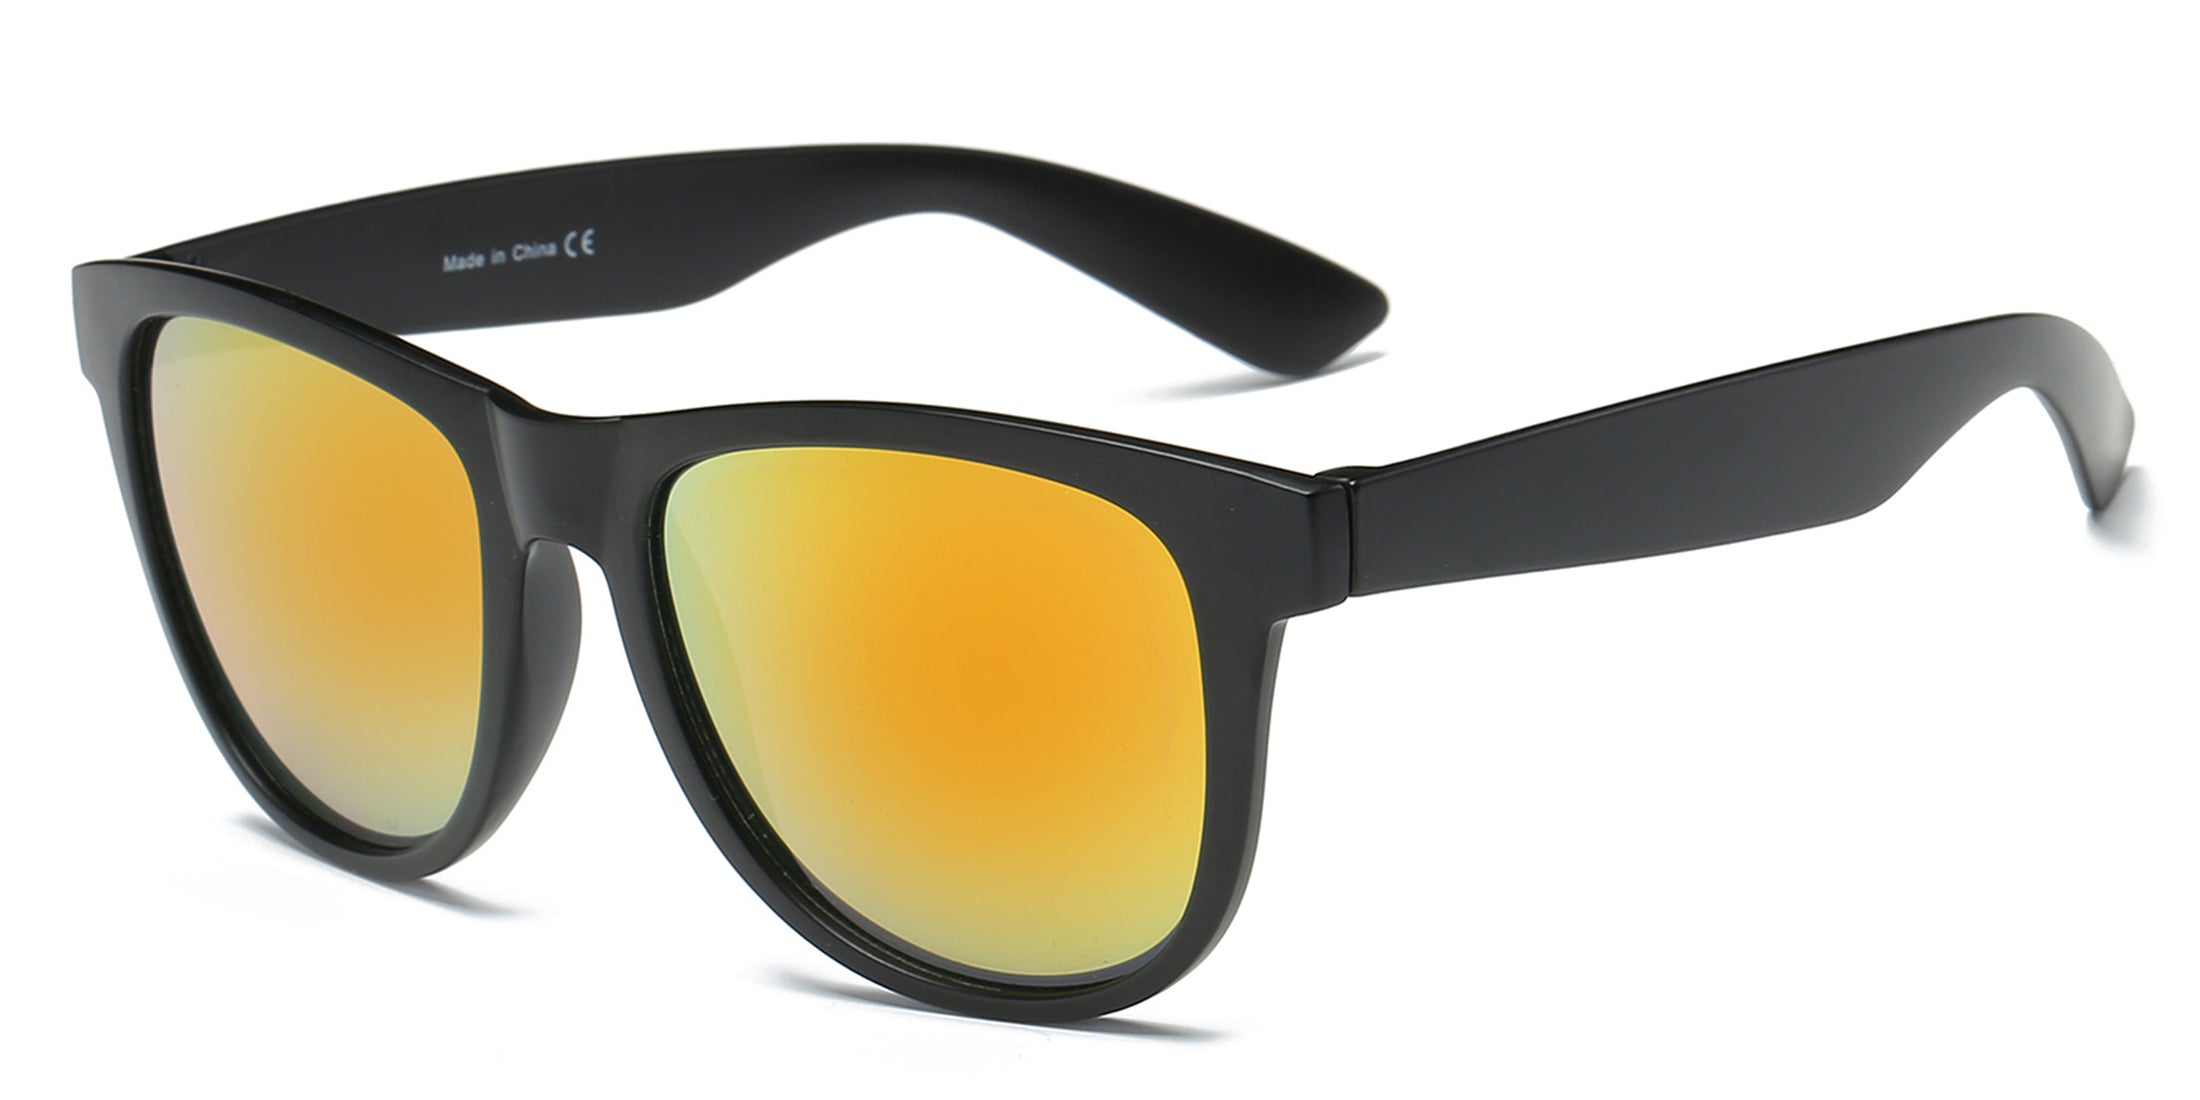 S1031 - Retro VINTAGE Round Shape Mirrored Sunglasses Black / Orange